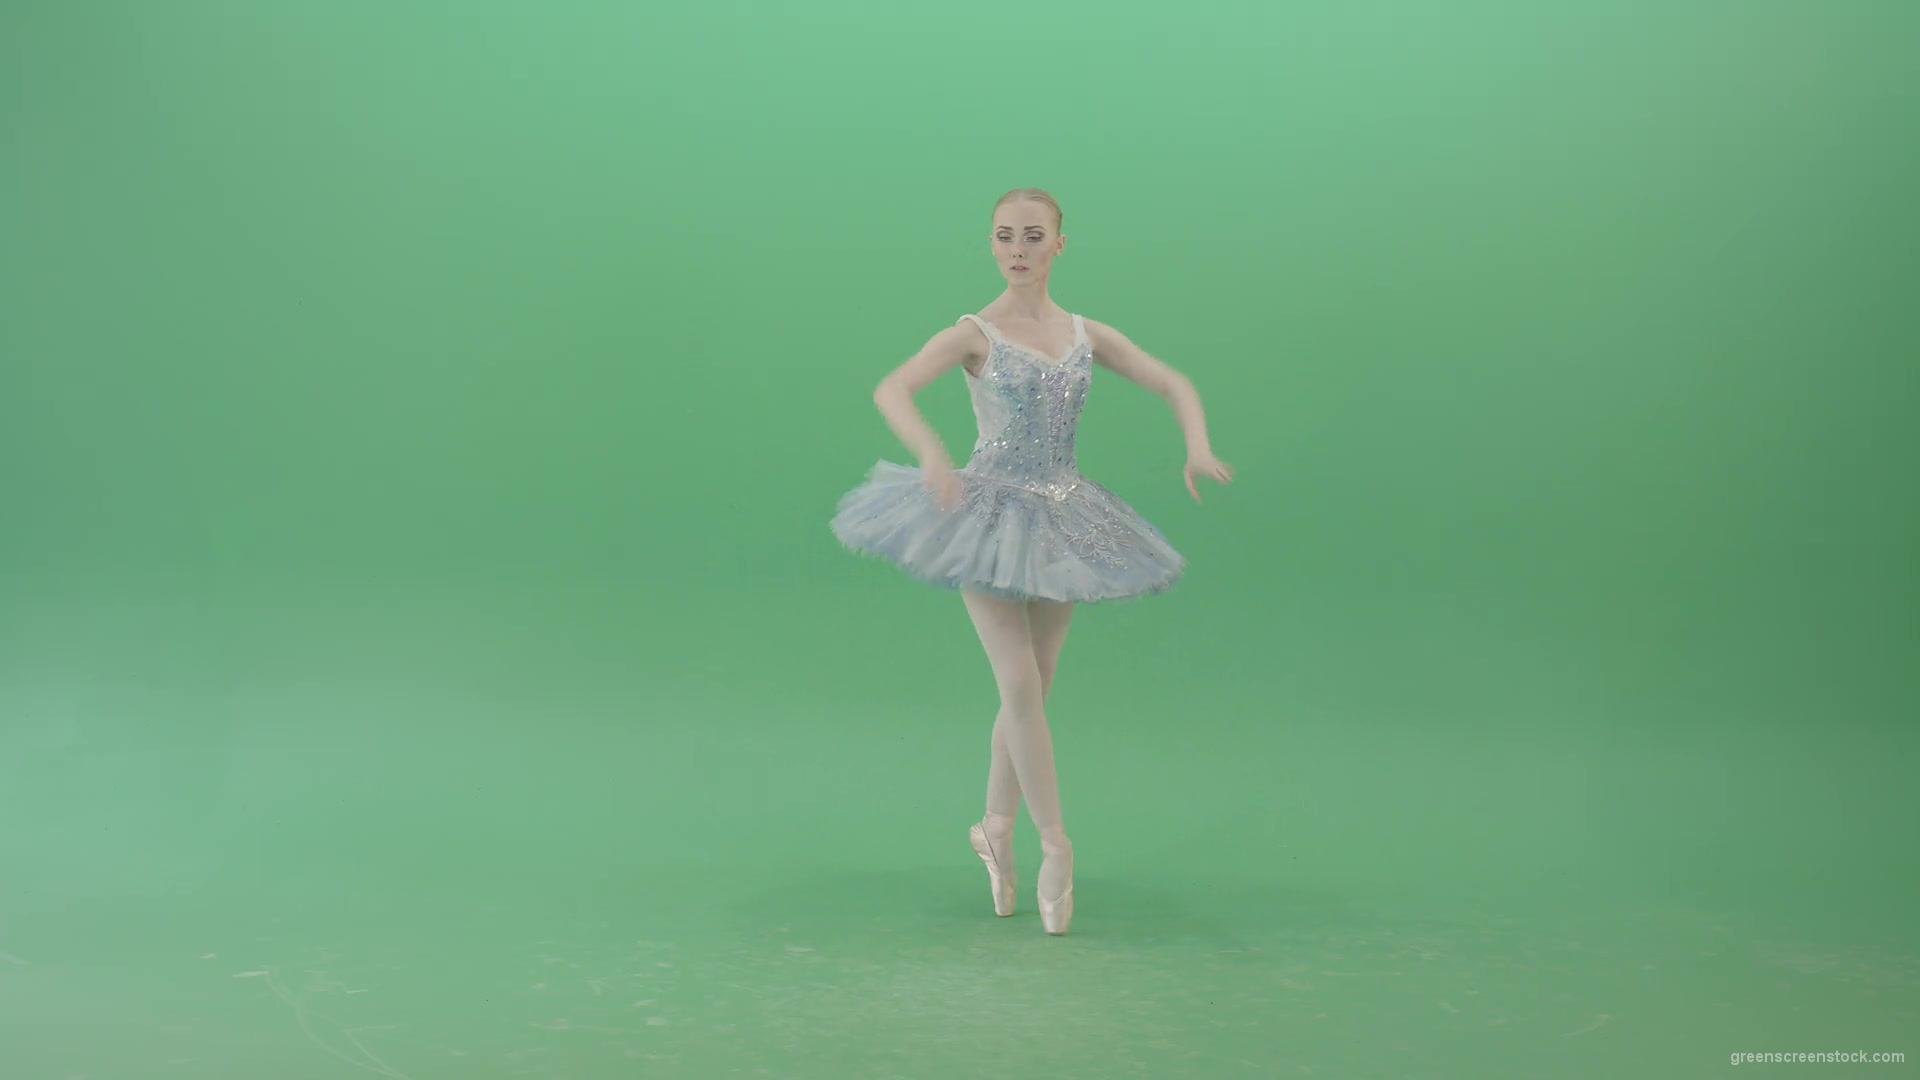 Beauty-blonde-ballerin-ballet-dancing-girl-in-blue-dress-spinning-over-green-screen-4K-Video-Footag-30fps-1920_002 Green Screen Stock